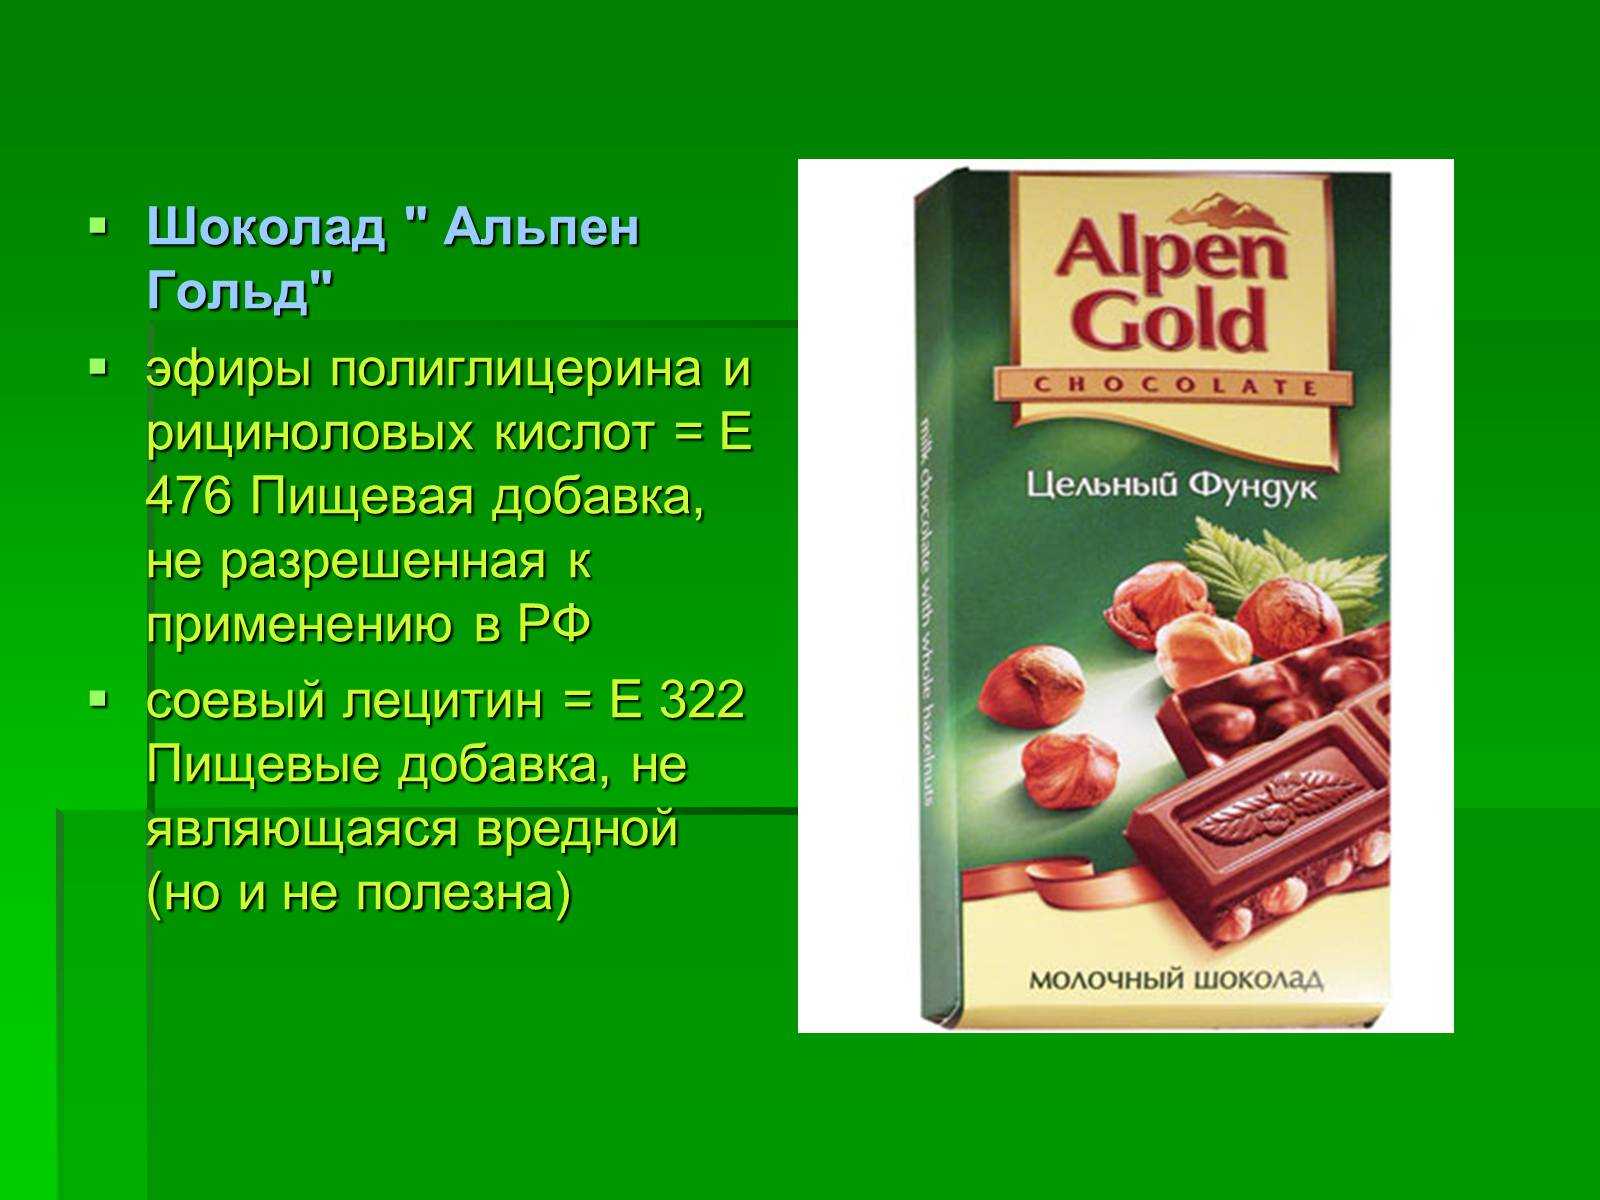 Е476 пищевая добавка в шоколаде